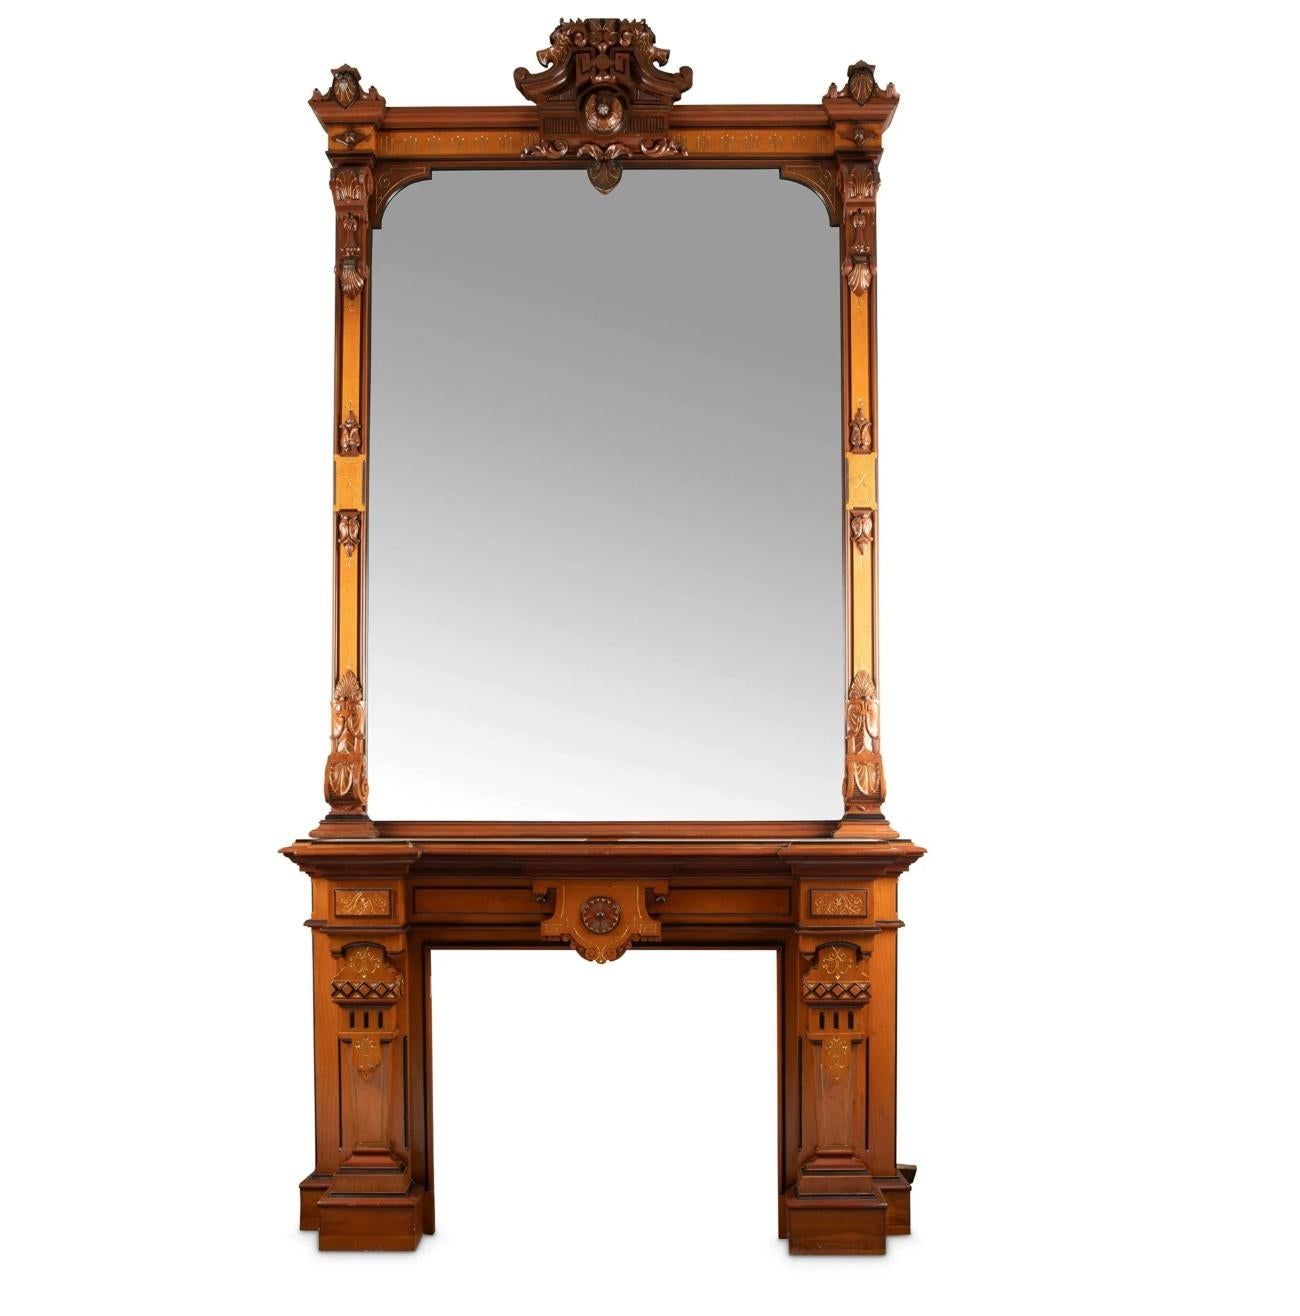 Victorian Renaissance Revival Mantel and Pier Mirror For Sale